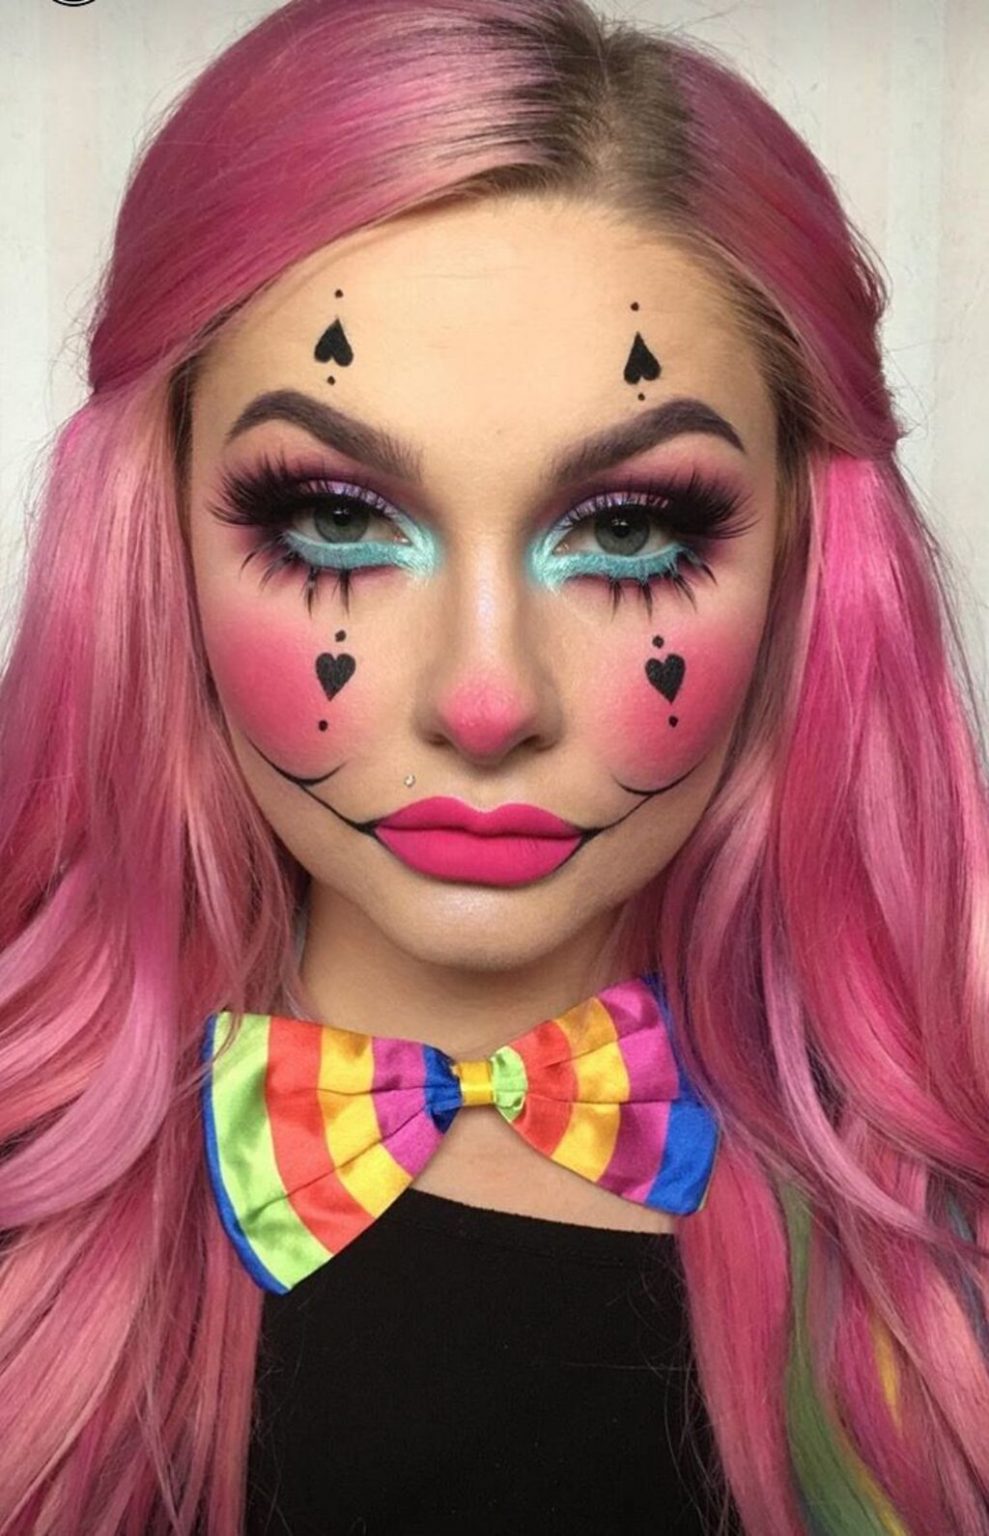 11+ Best Creepy Clown Makeup Ideas for Halloween Costume